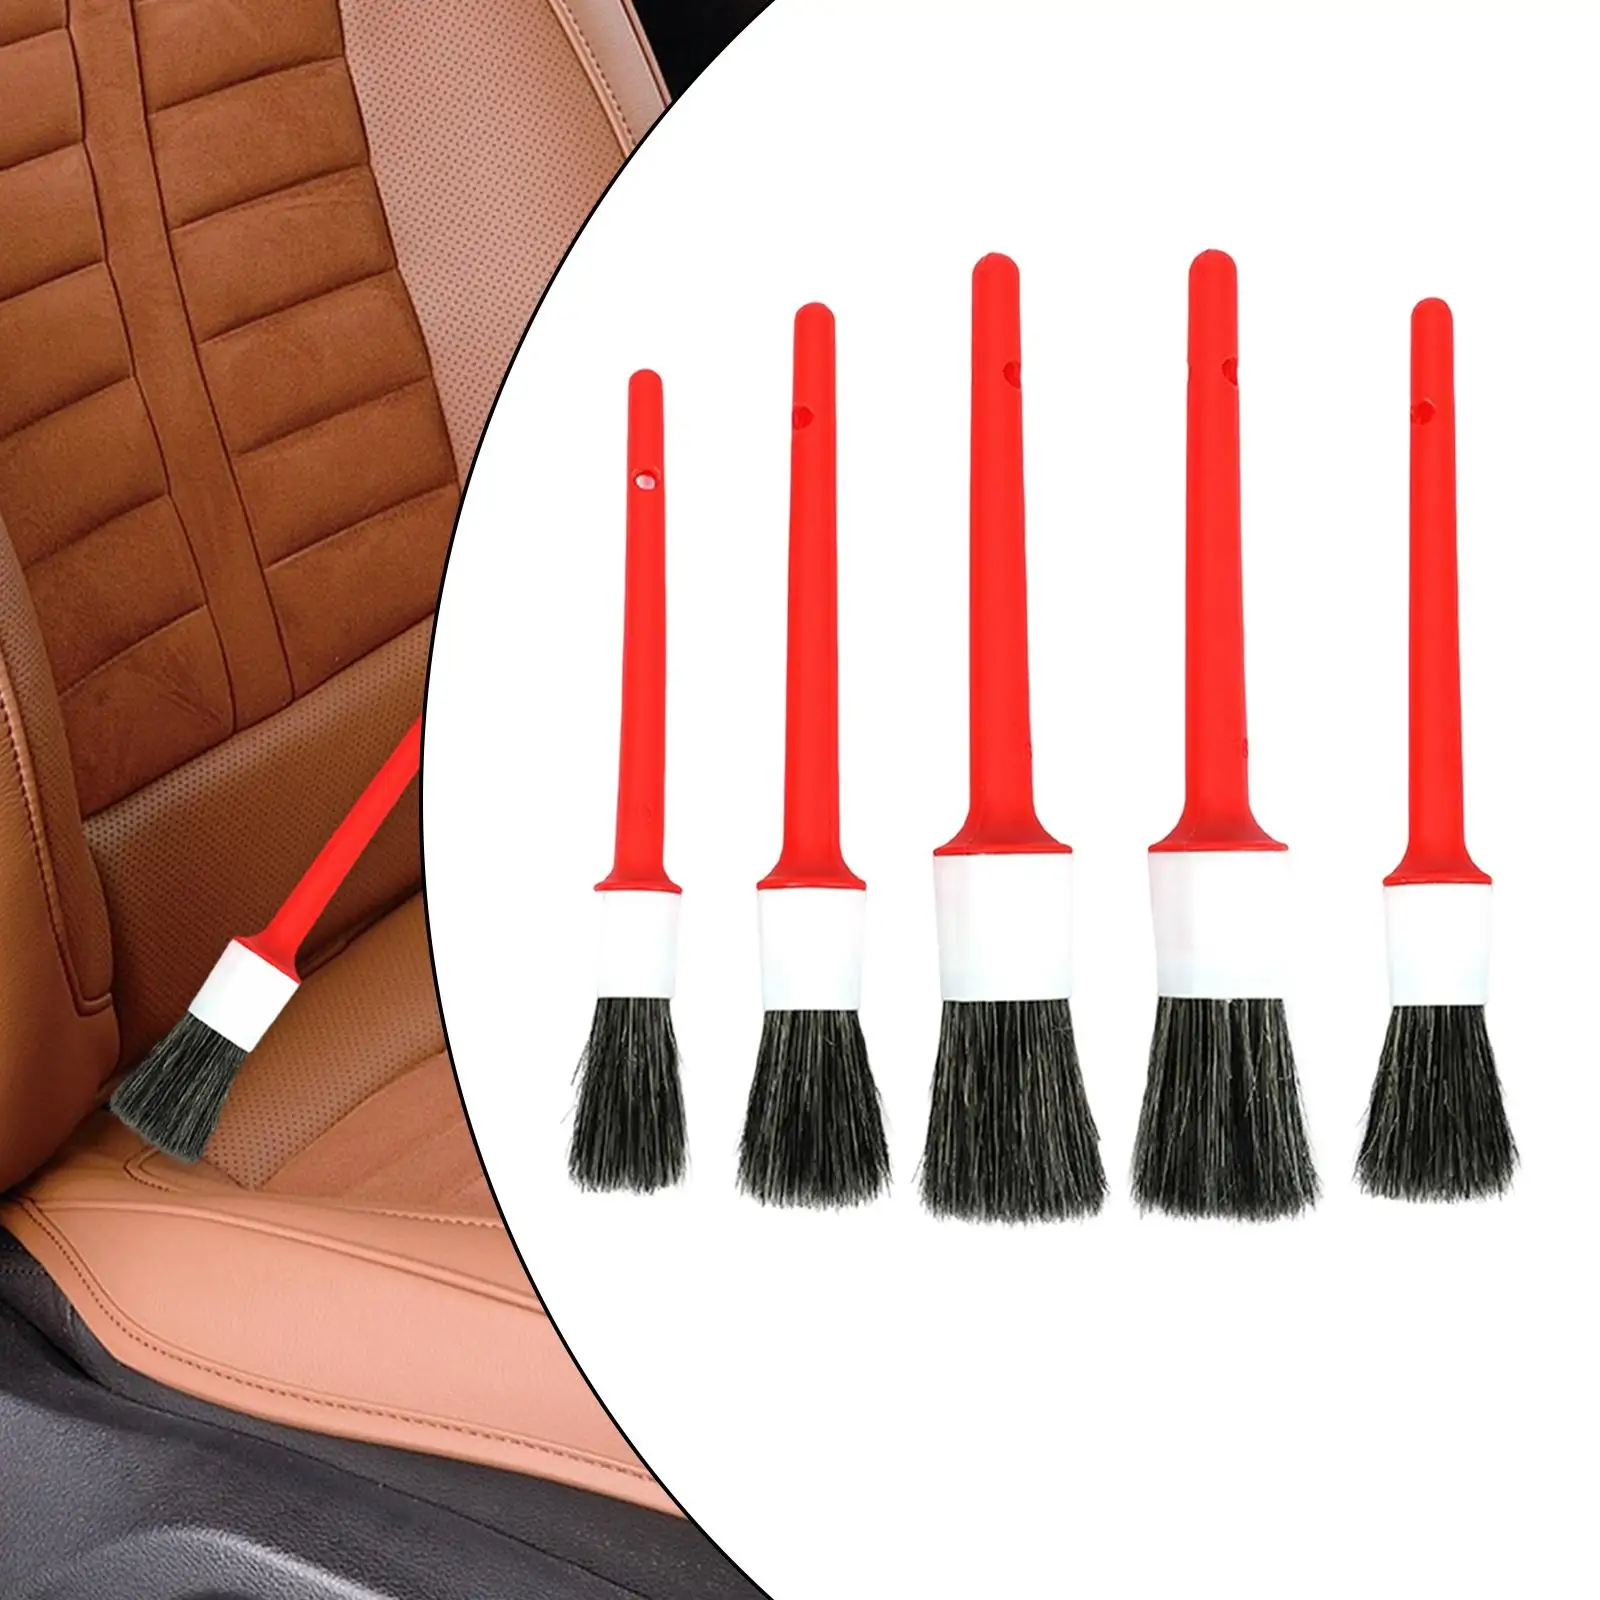 Automotive Car Automobile Detailing Brush Professional for Vents Interior Exterior